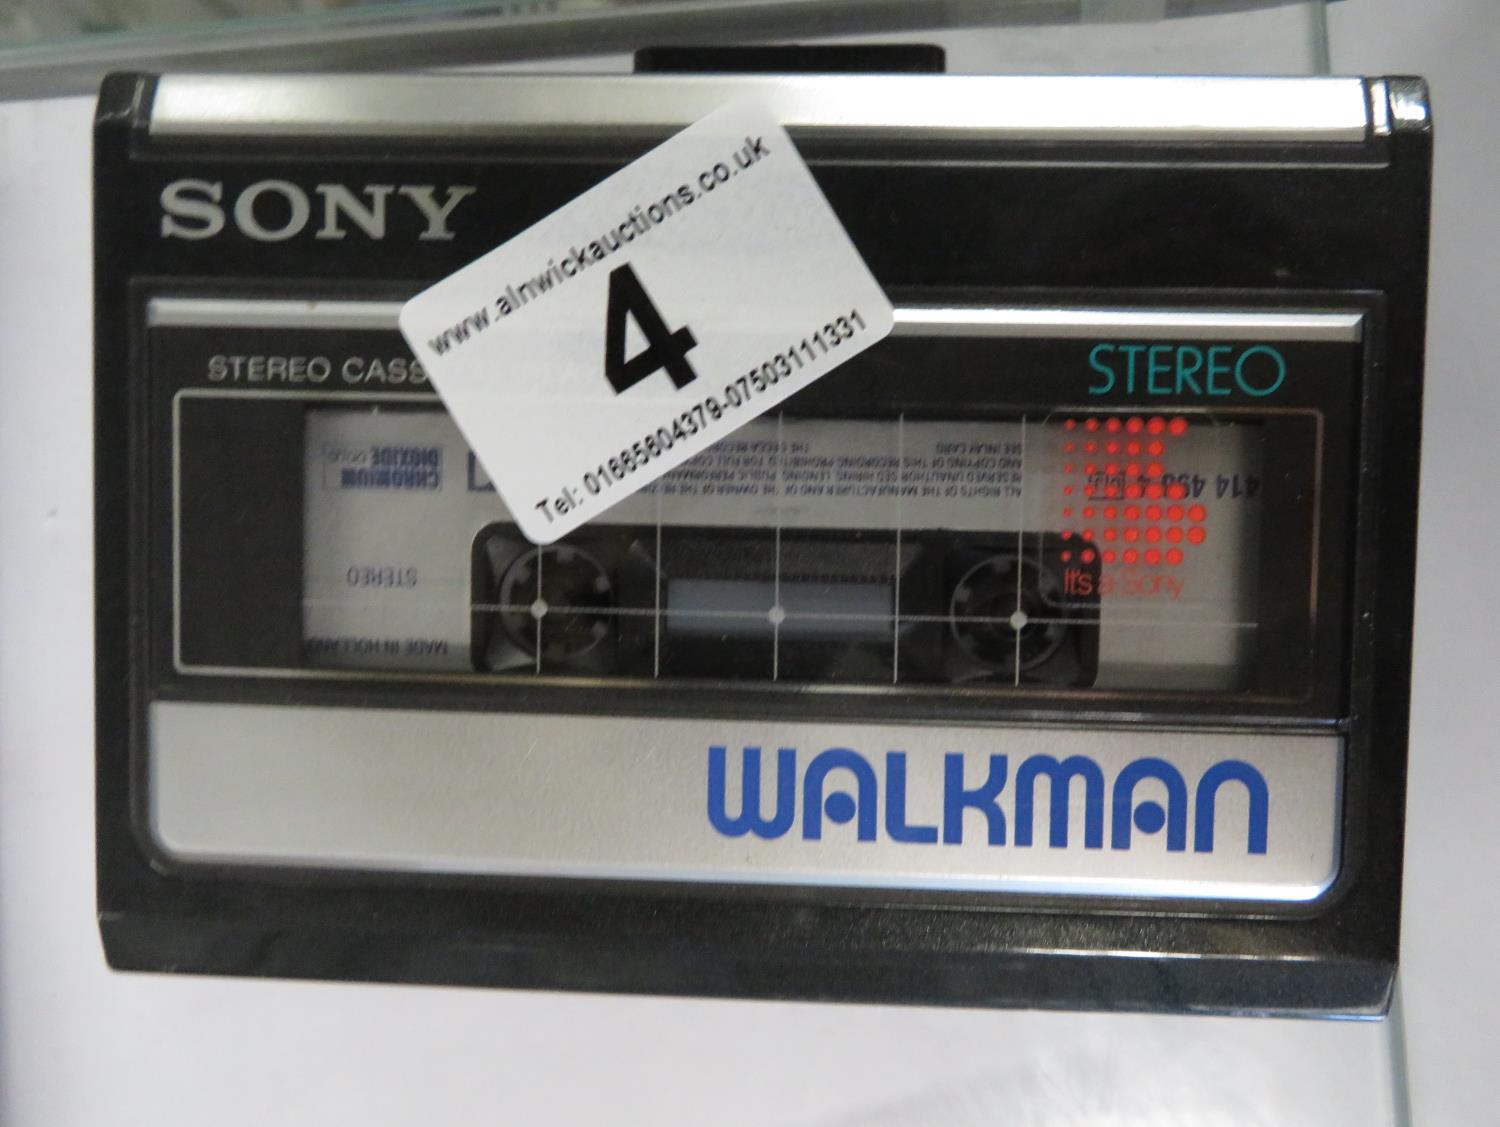 Sony Walkman WM 31 cassette player